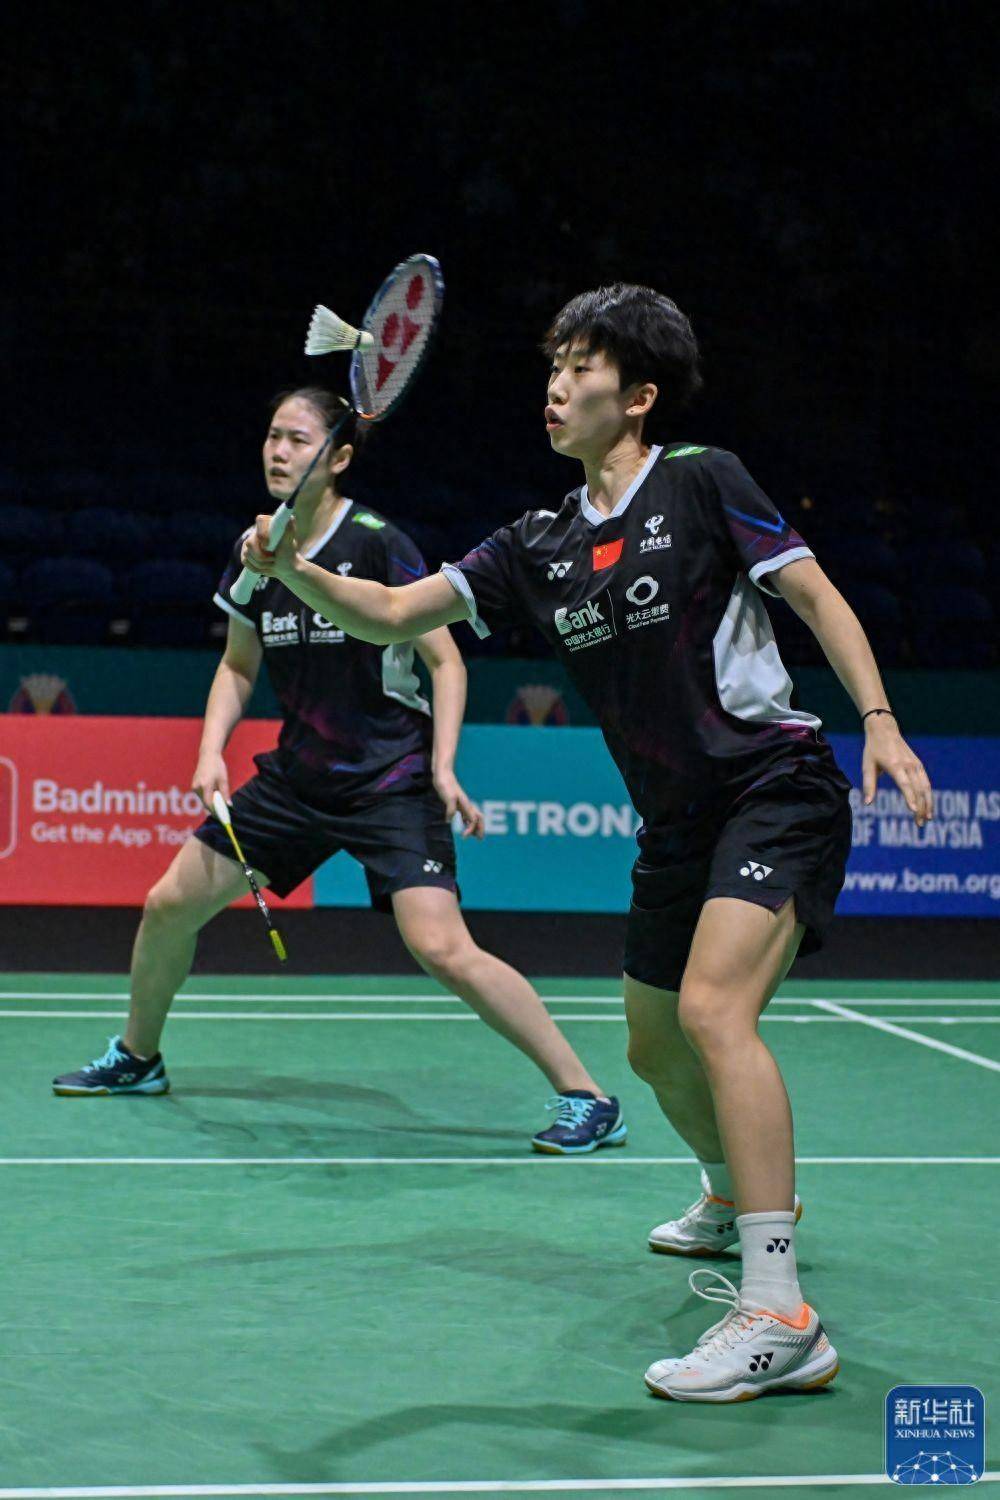 【168sports】羽毛球丨马来西亚公开赛决出四强